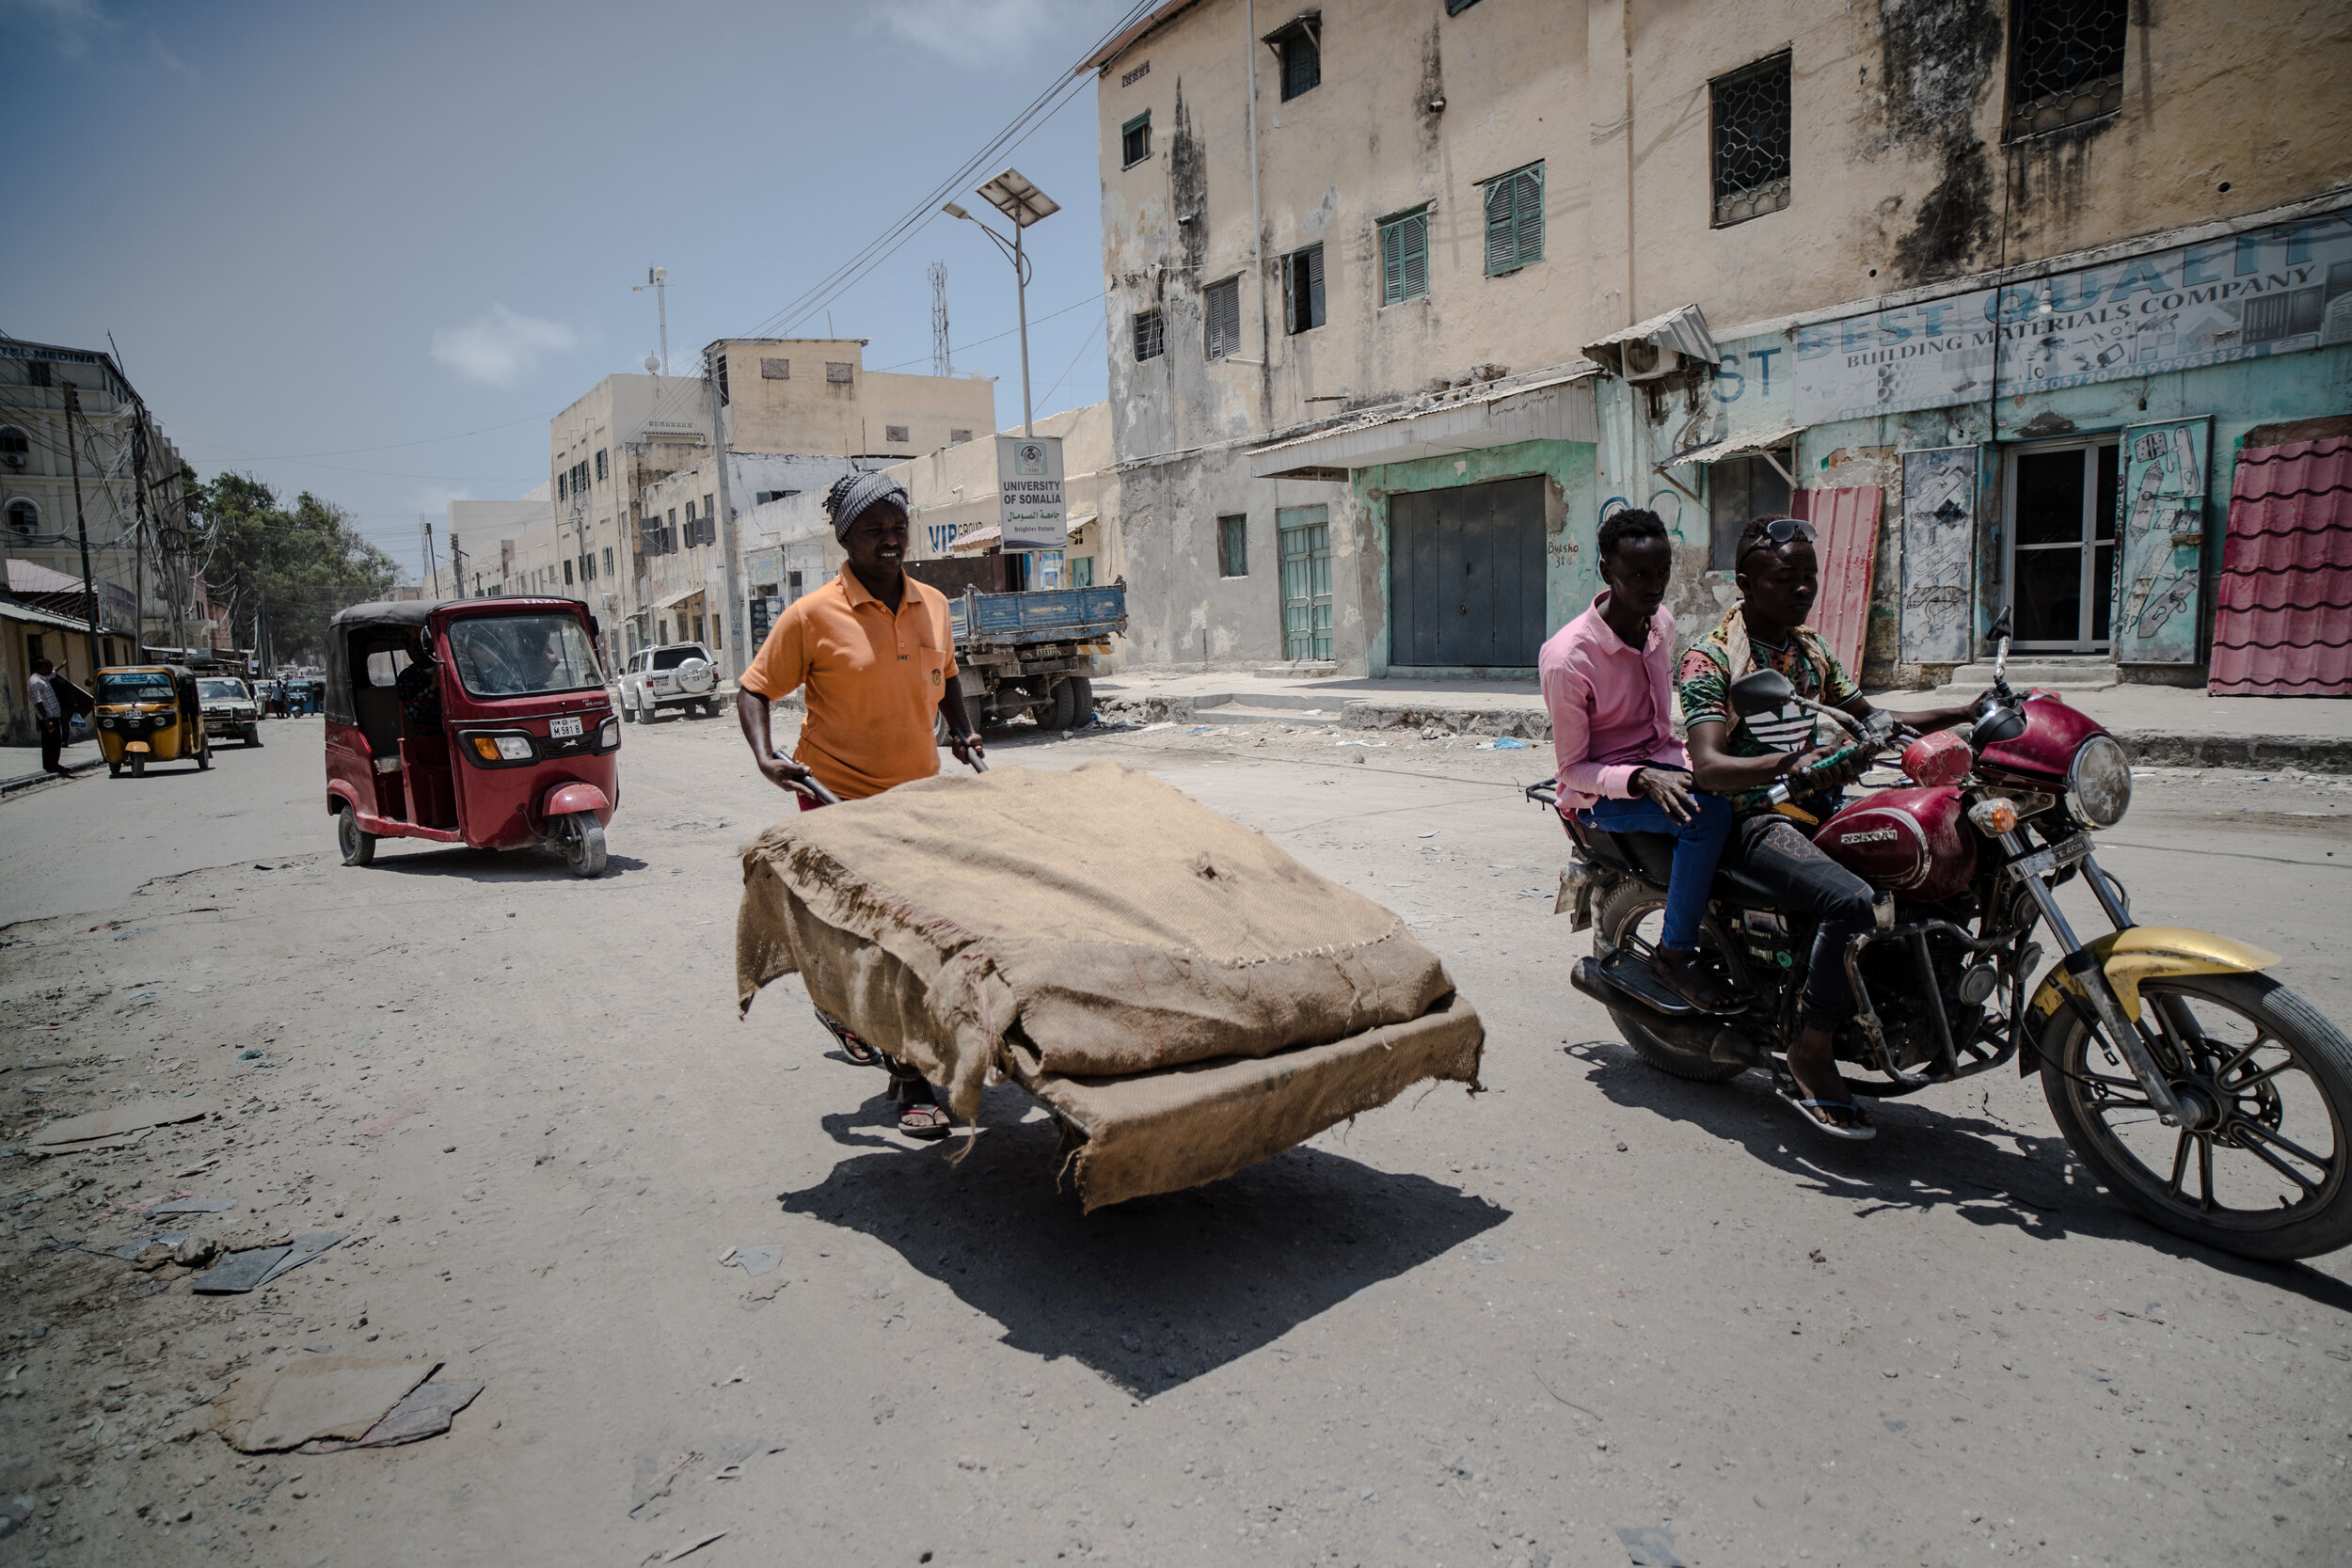  Mogadishu streets, Somalia, 2017 